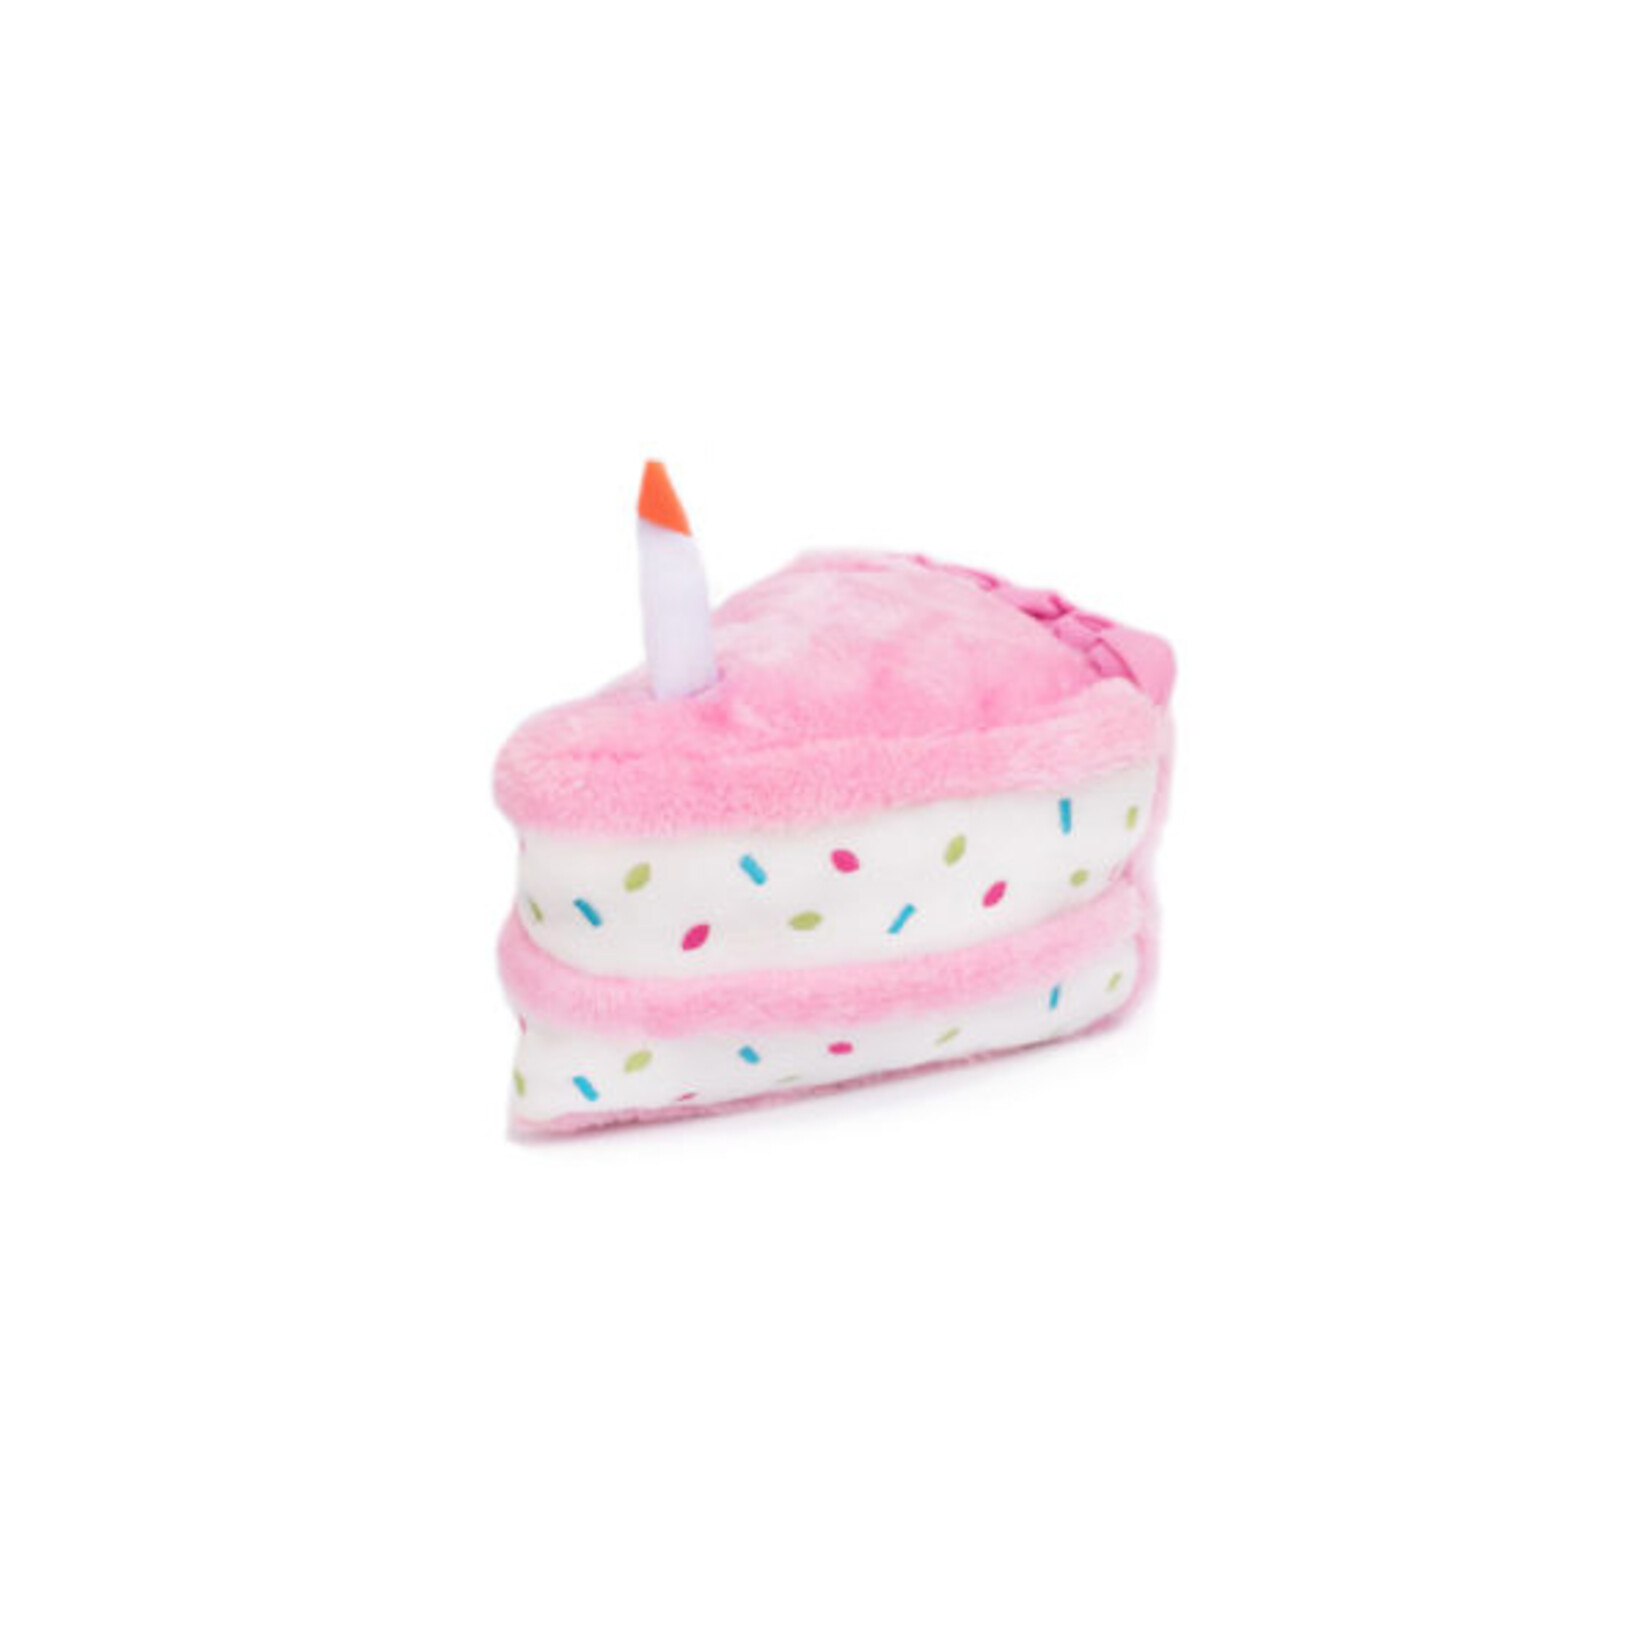 Zippy Paws Pink - Birthday Cake - Dog Toy - Zippy Paws